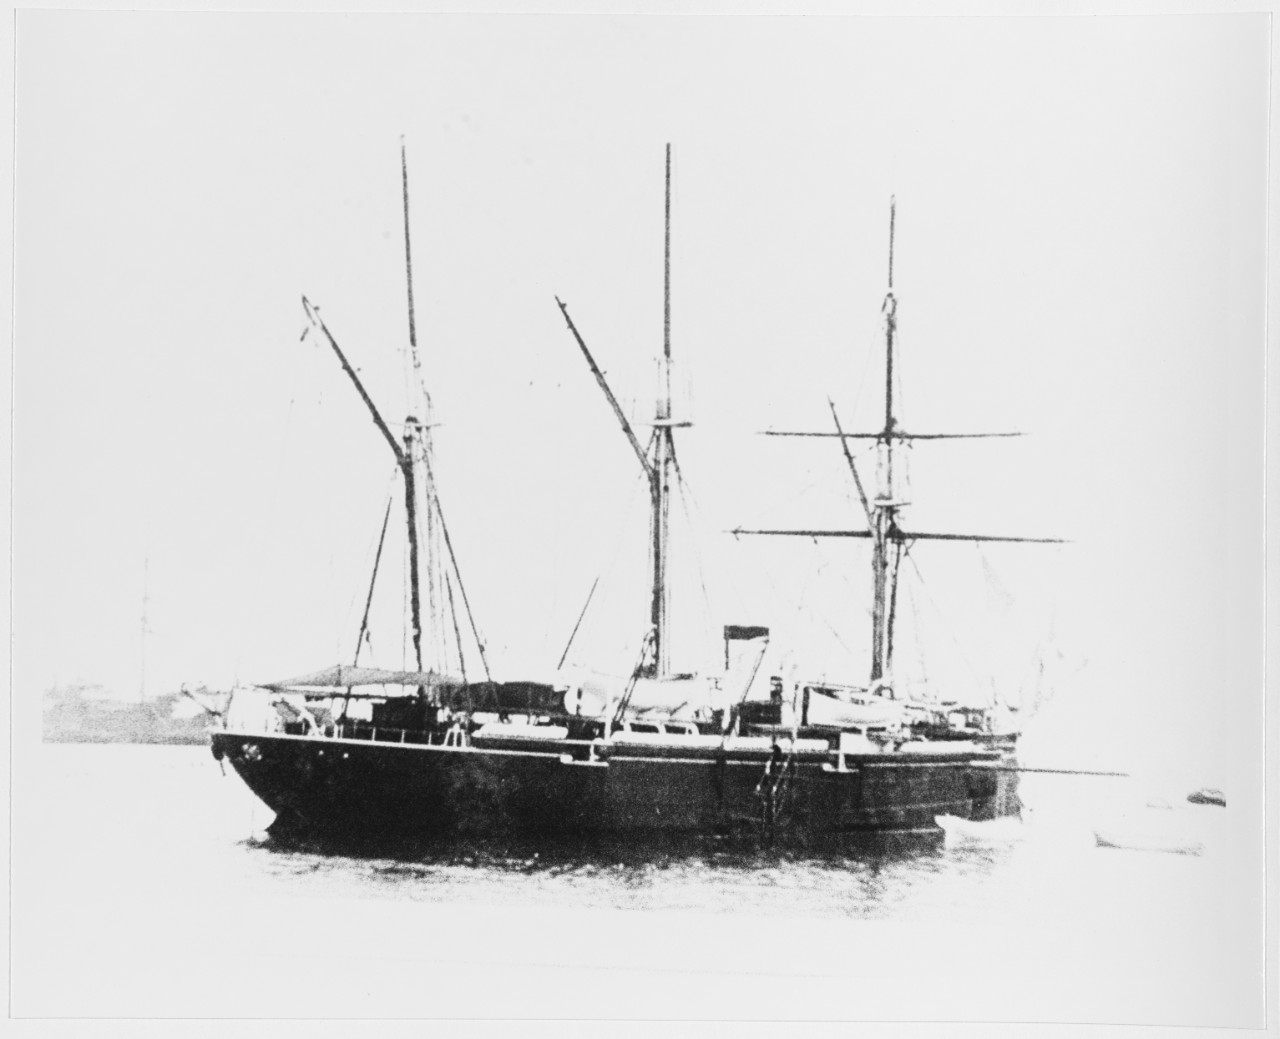 KOREETZ (Russian gunboat, 1886-1904)